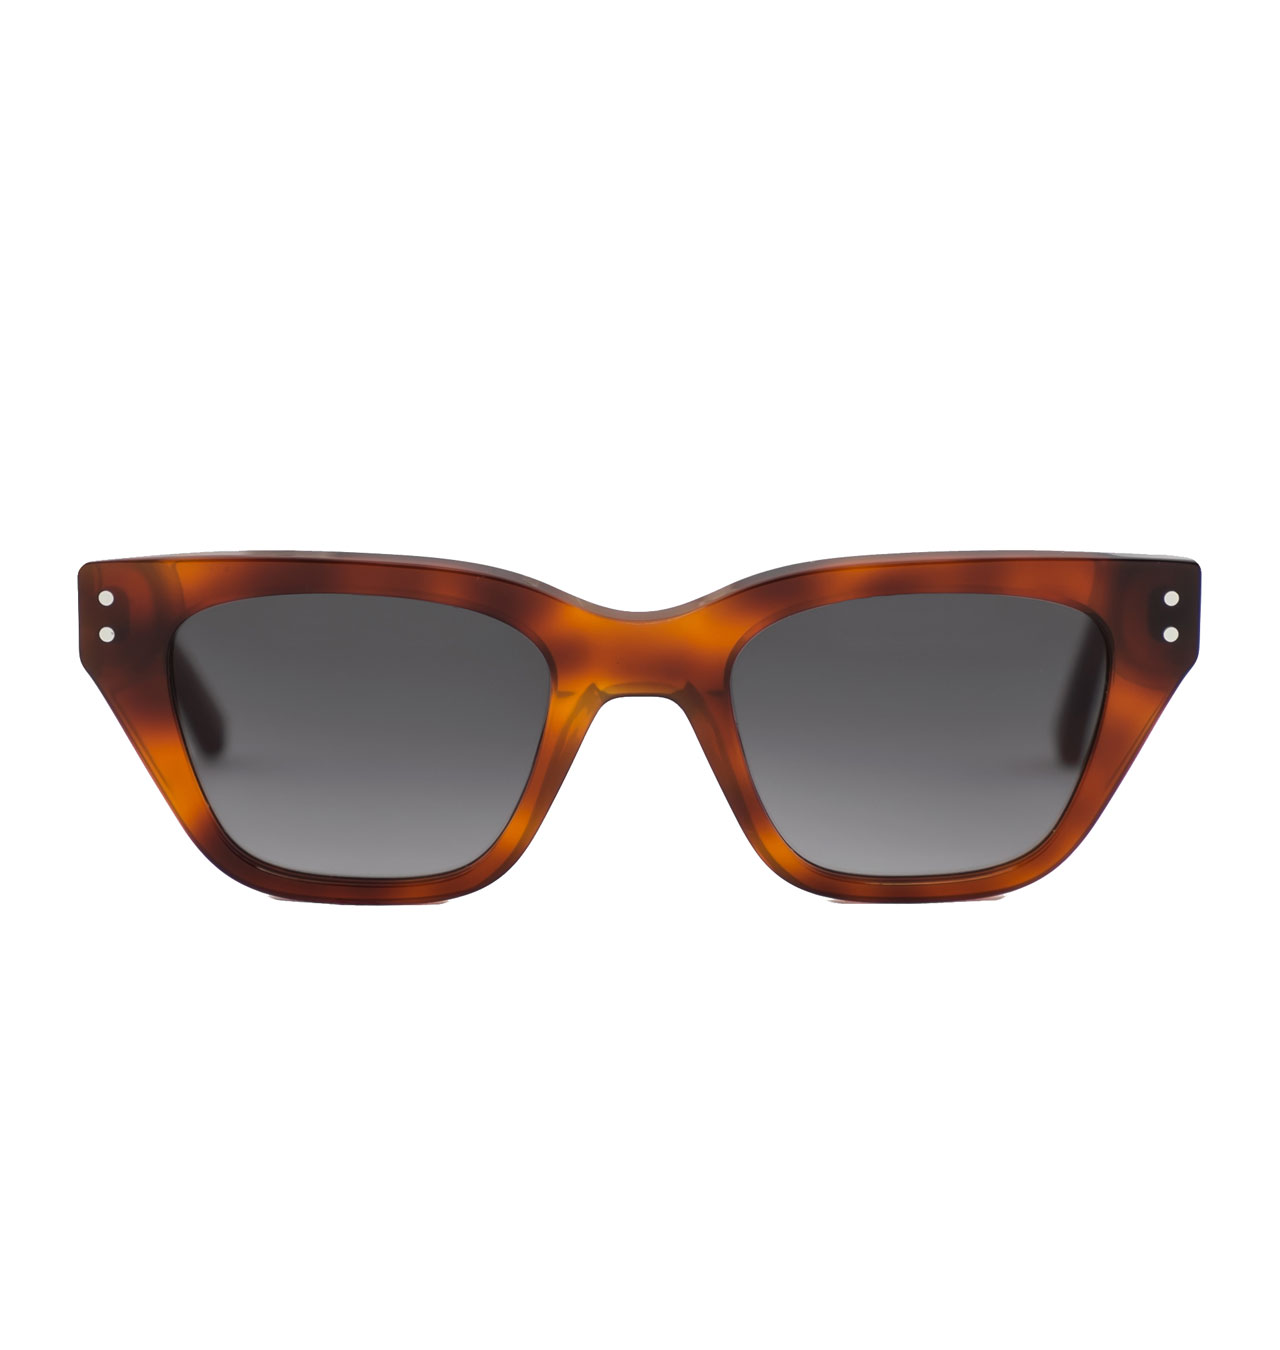 Monokel Eyewear - Memphis Amber Sunglasses - Grey Gradient Lens